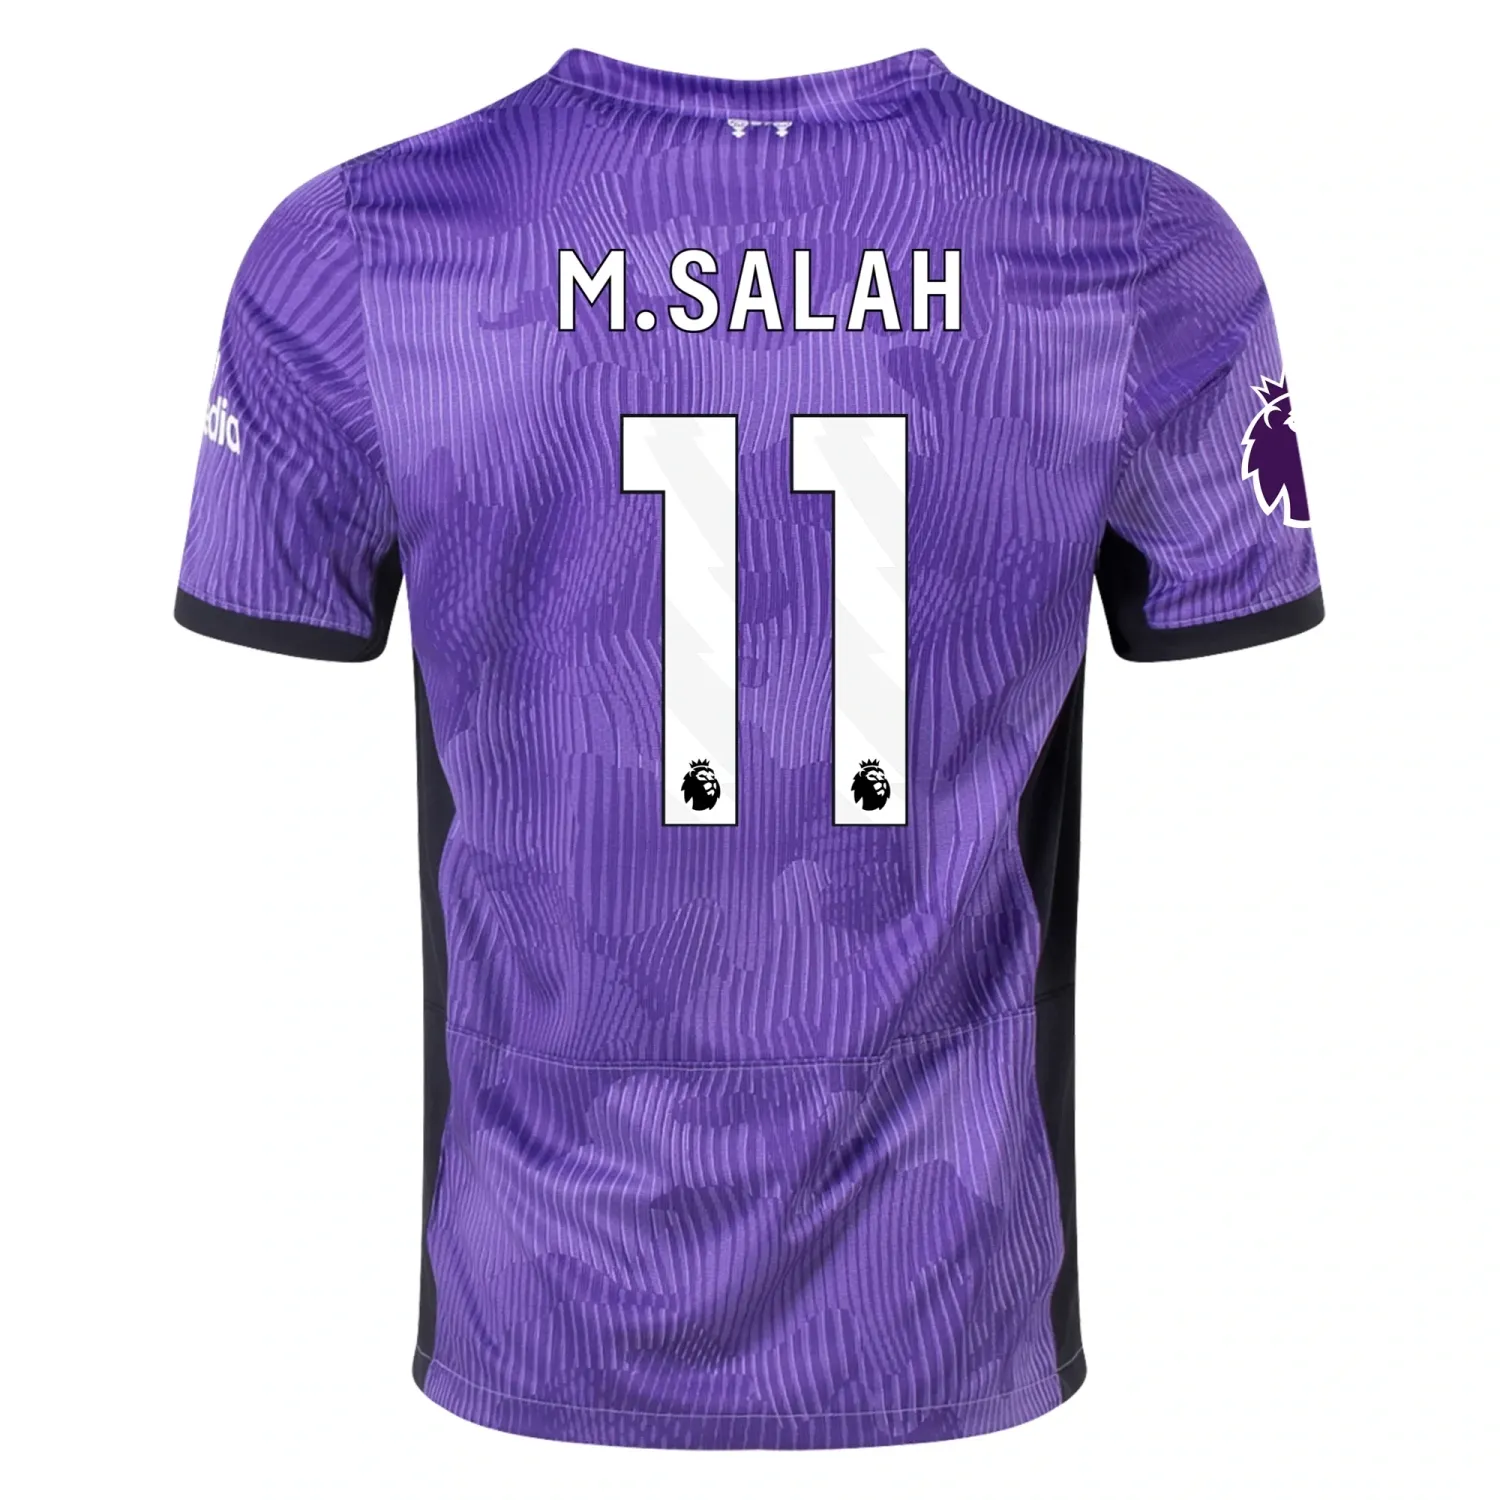 M. SALAH Liverpool 23/24 Third Purple Jersey for Men